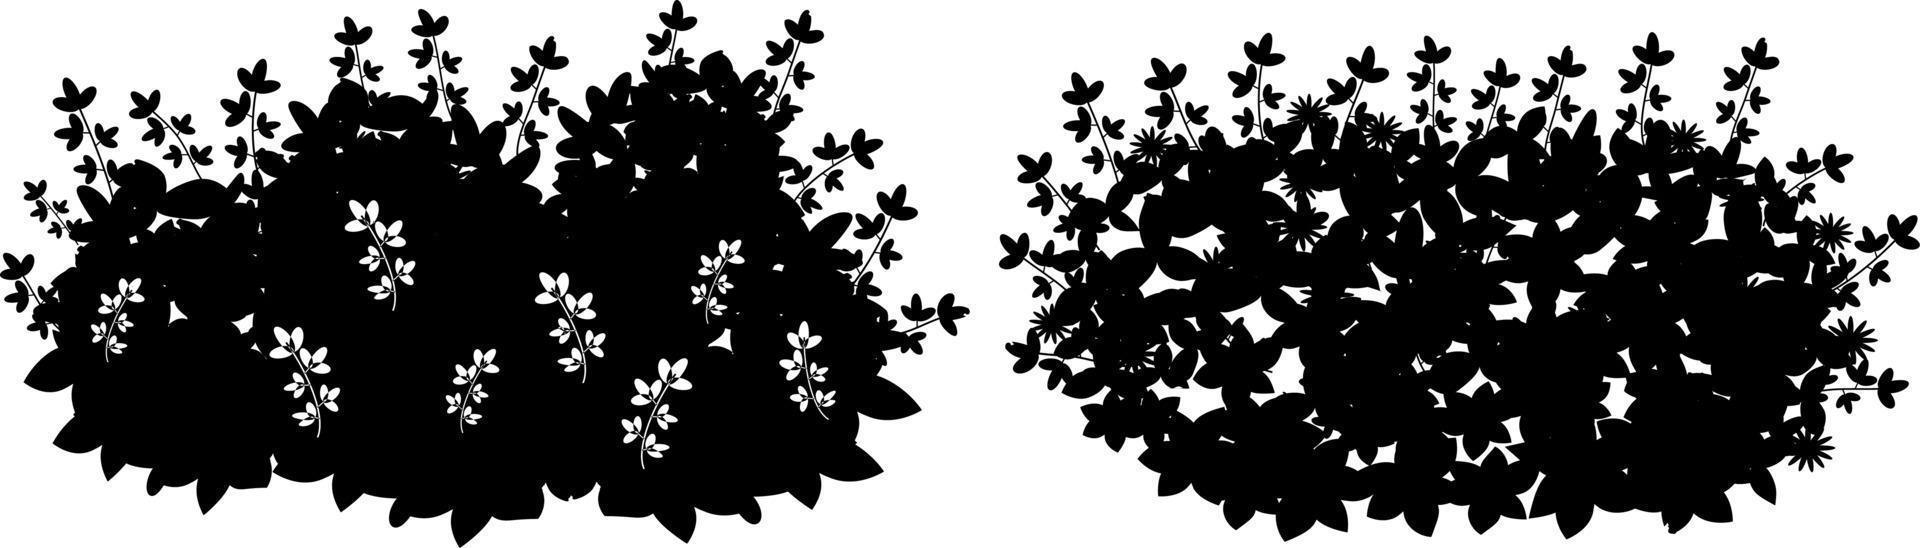 desenho vetorial monocromático de arbustos. vetor